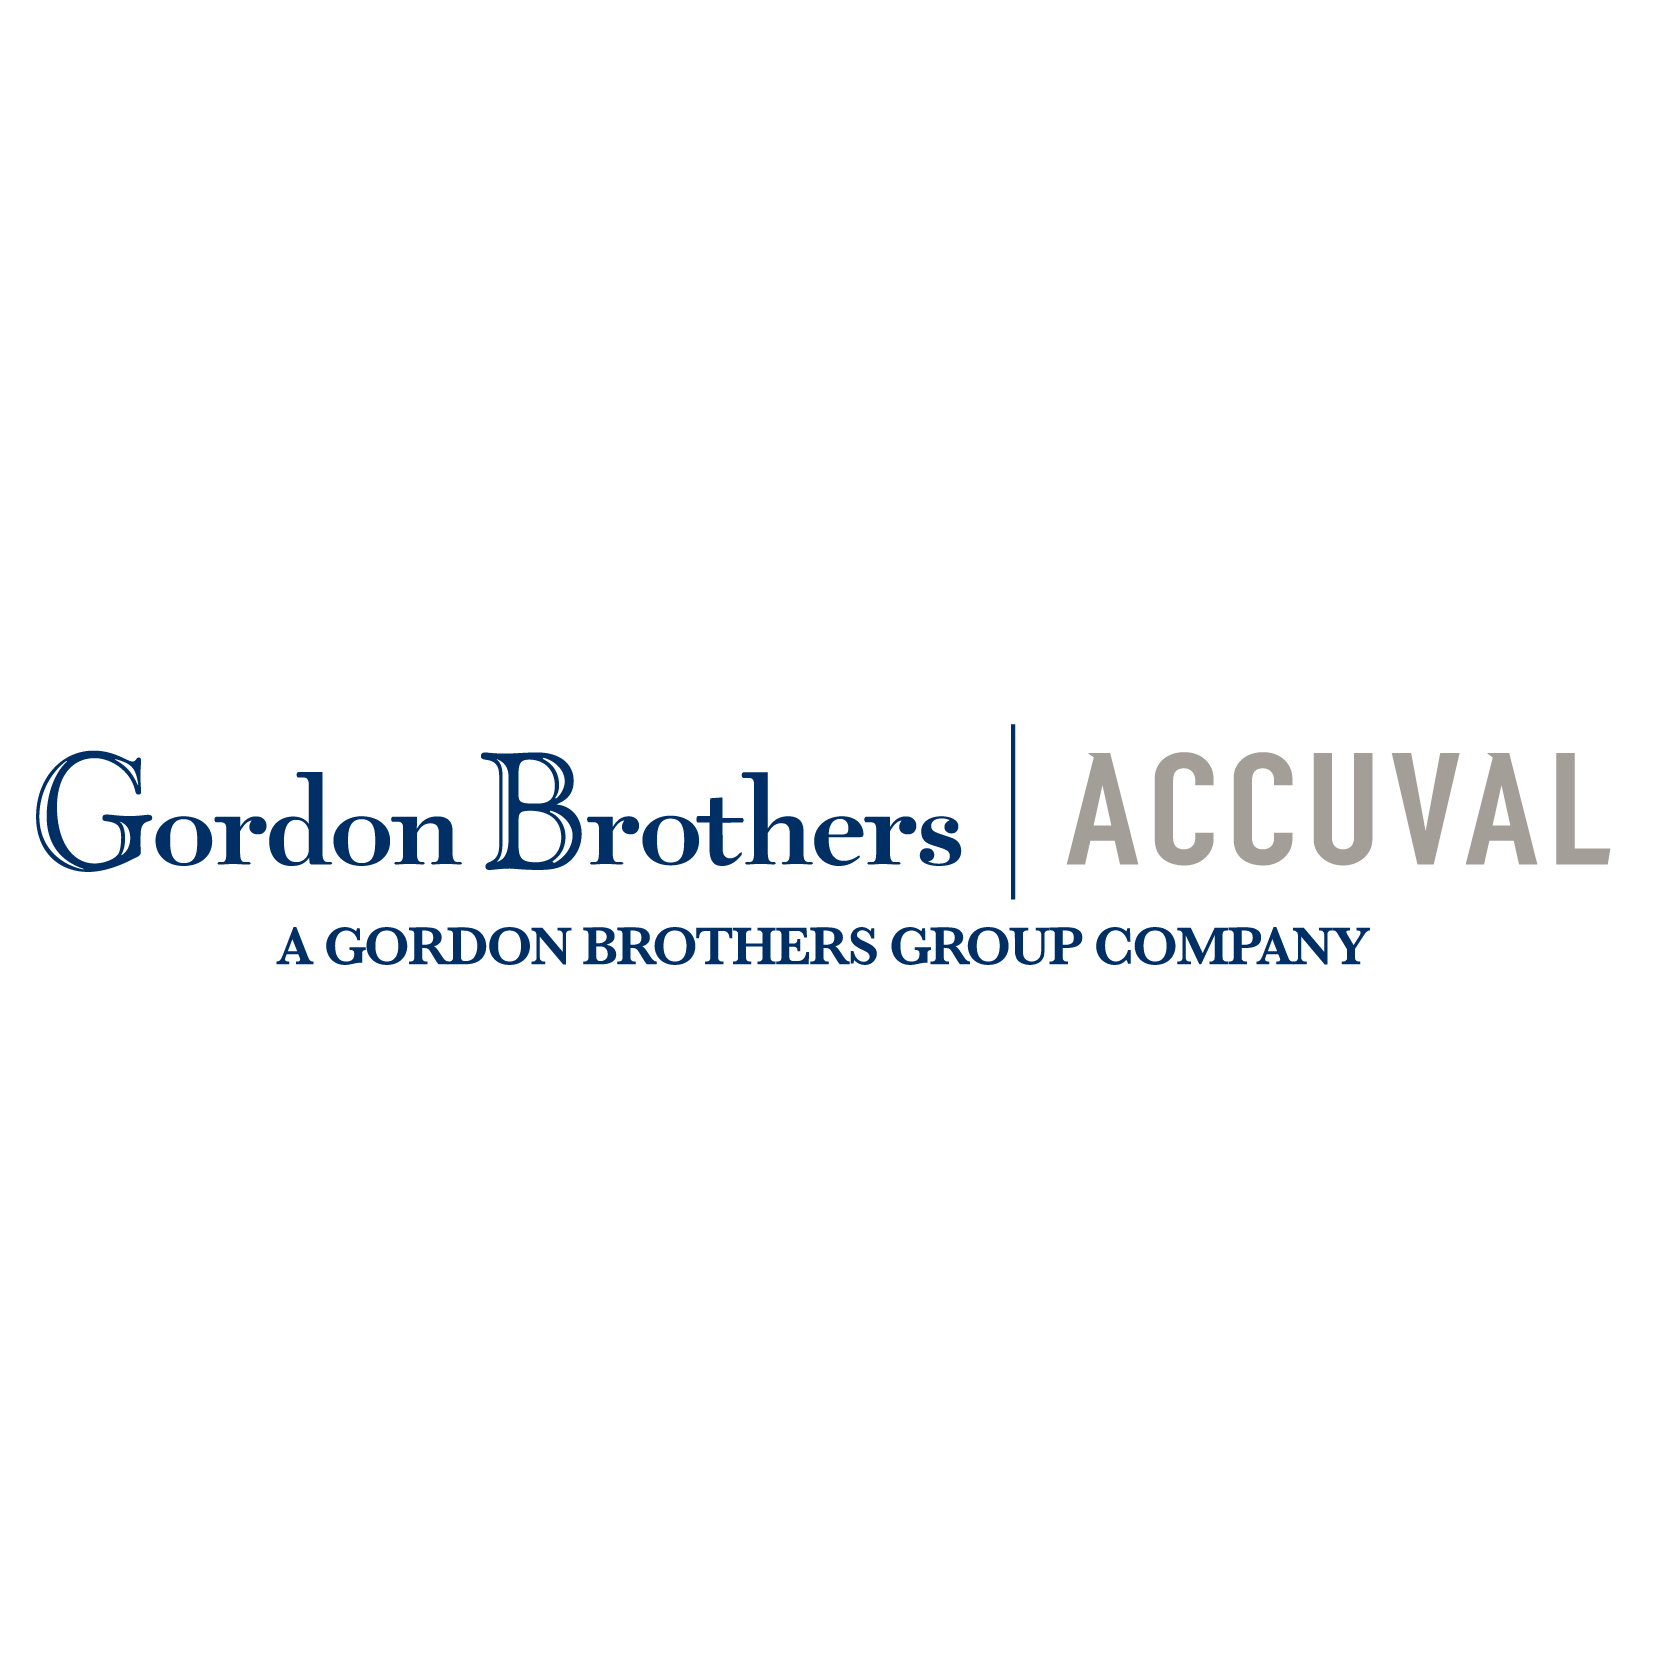 Gordon Brothers-AccuVal Photo